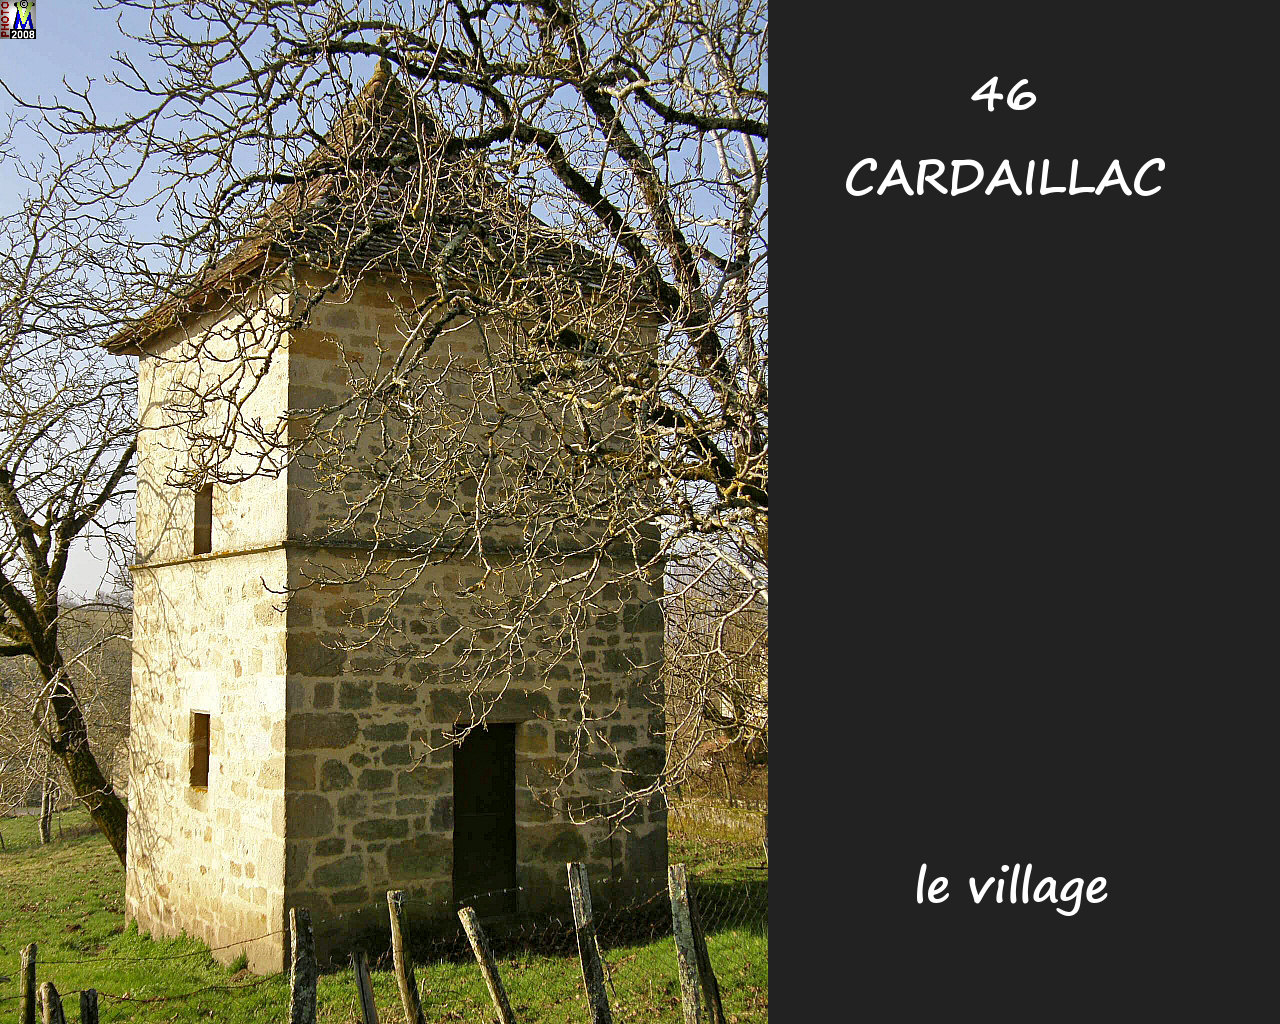 46CARDAILLAC_village_178.jpg